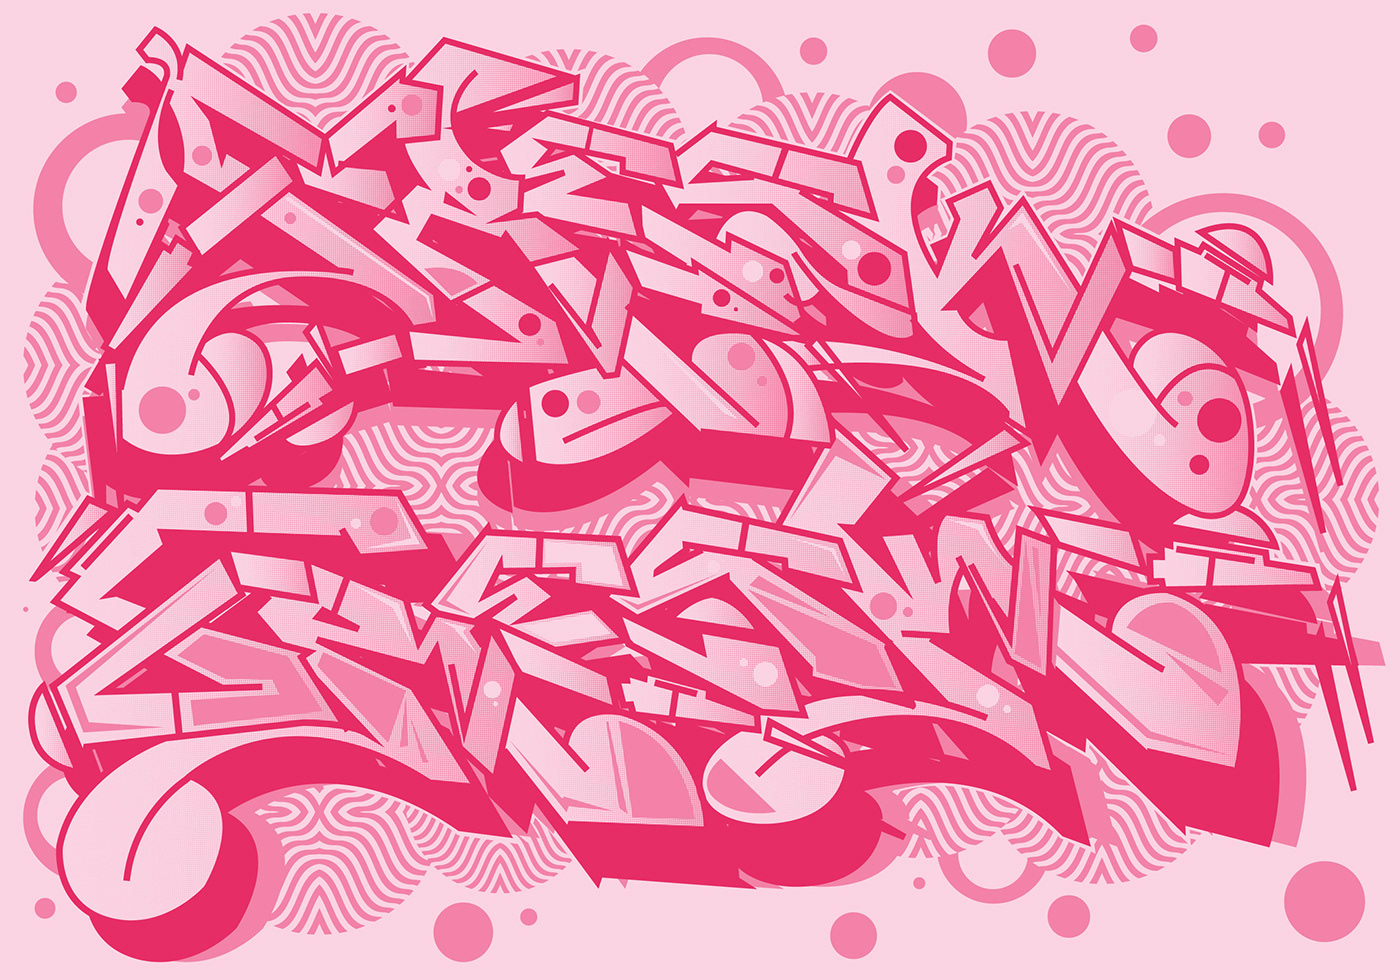 Graffiti stylewriting serigrahy silkscreen ILLUSTRATION  writer spray Montana masters